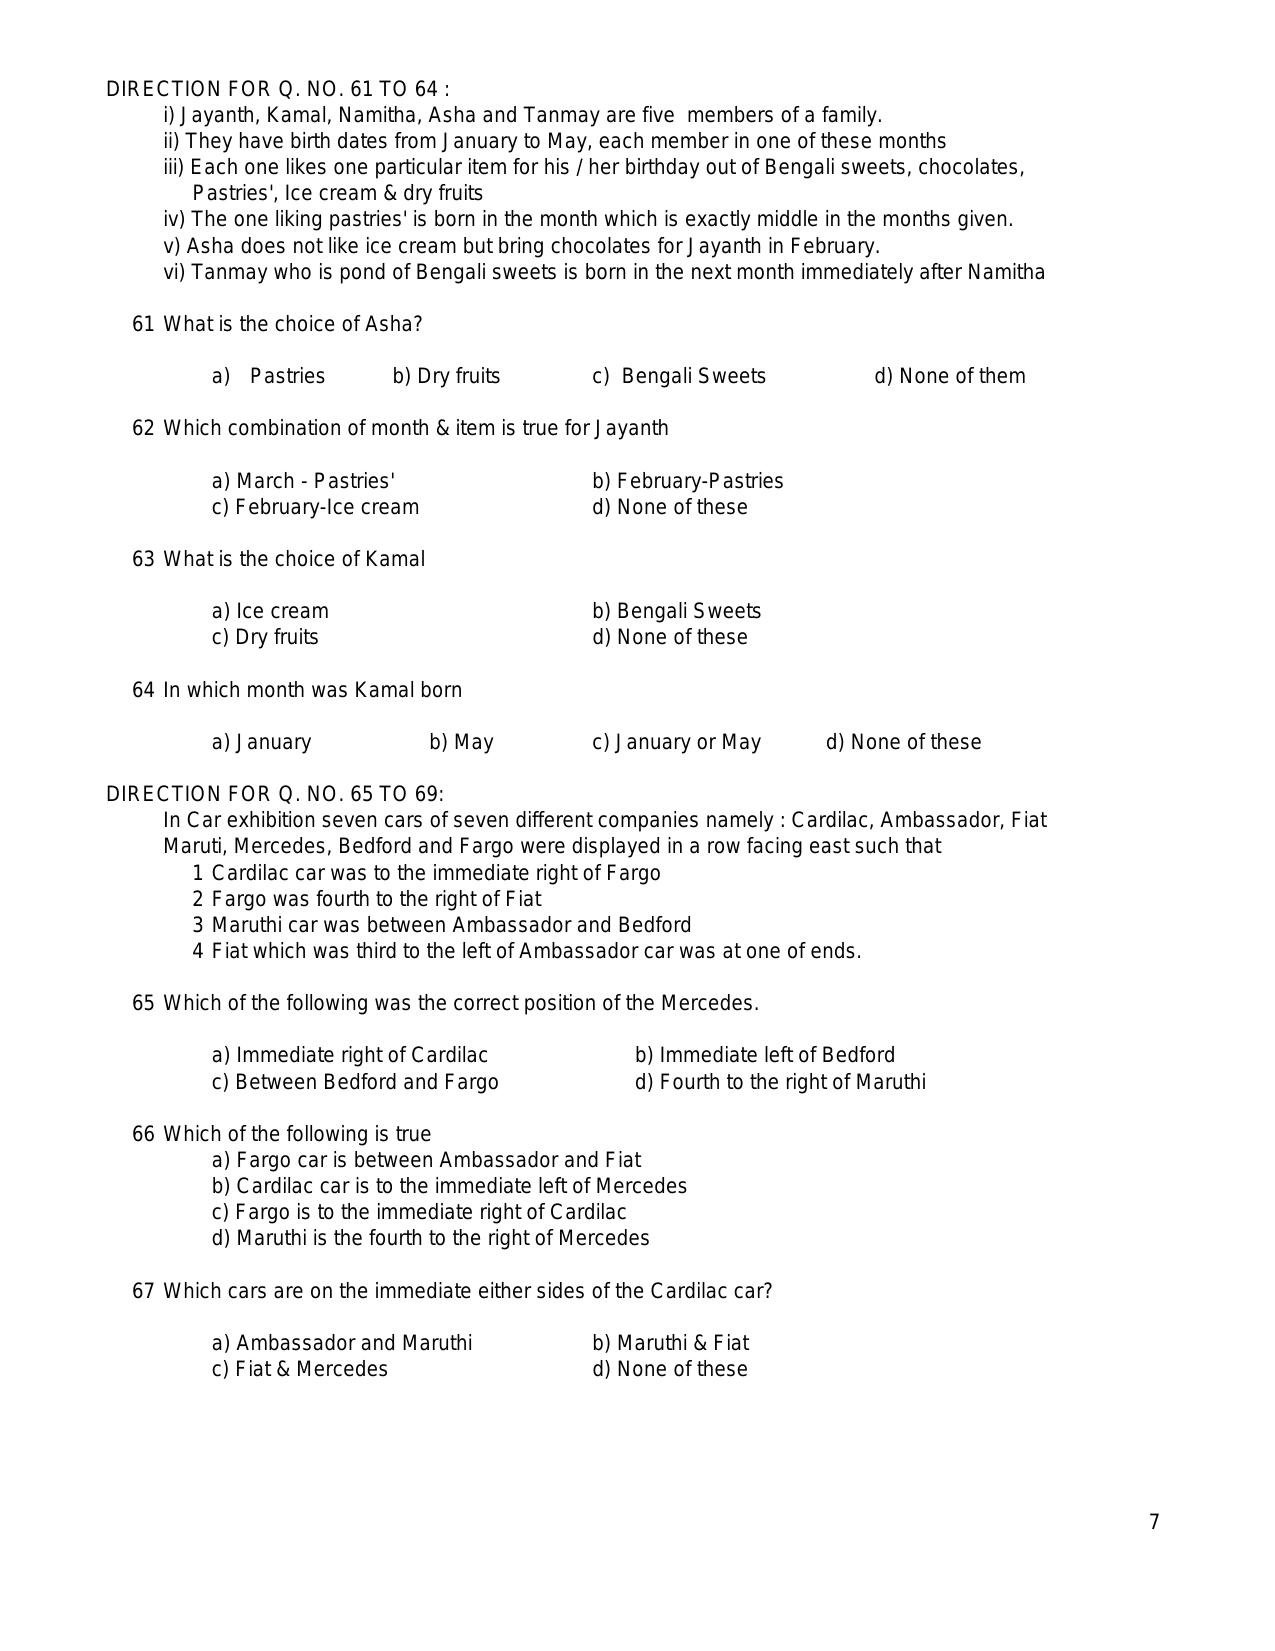 SEBI Officer Quantitative Aptitude Sample Paper - Page 7